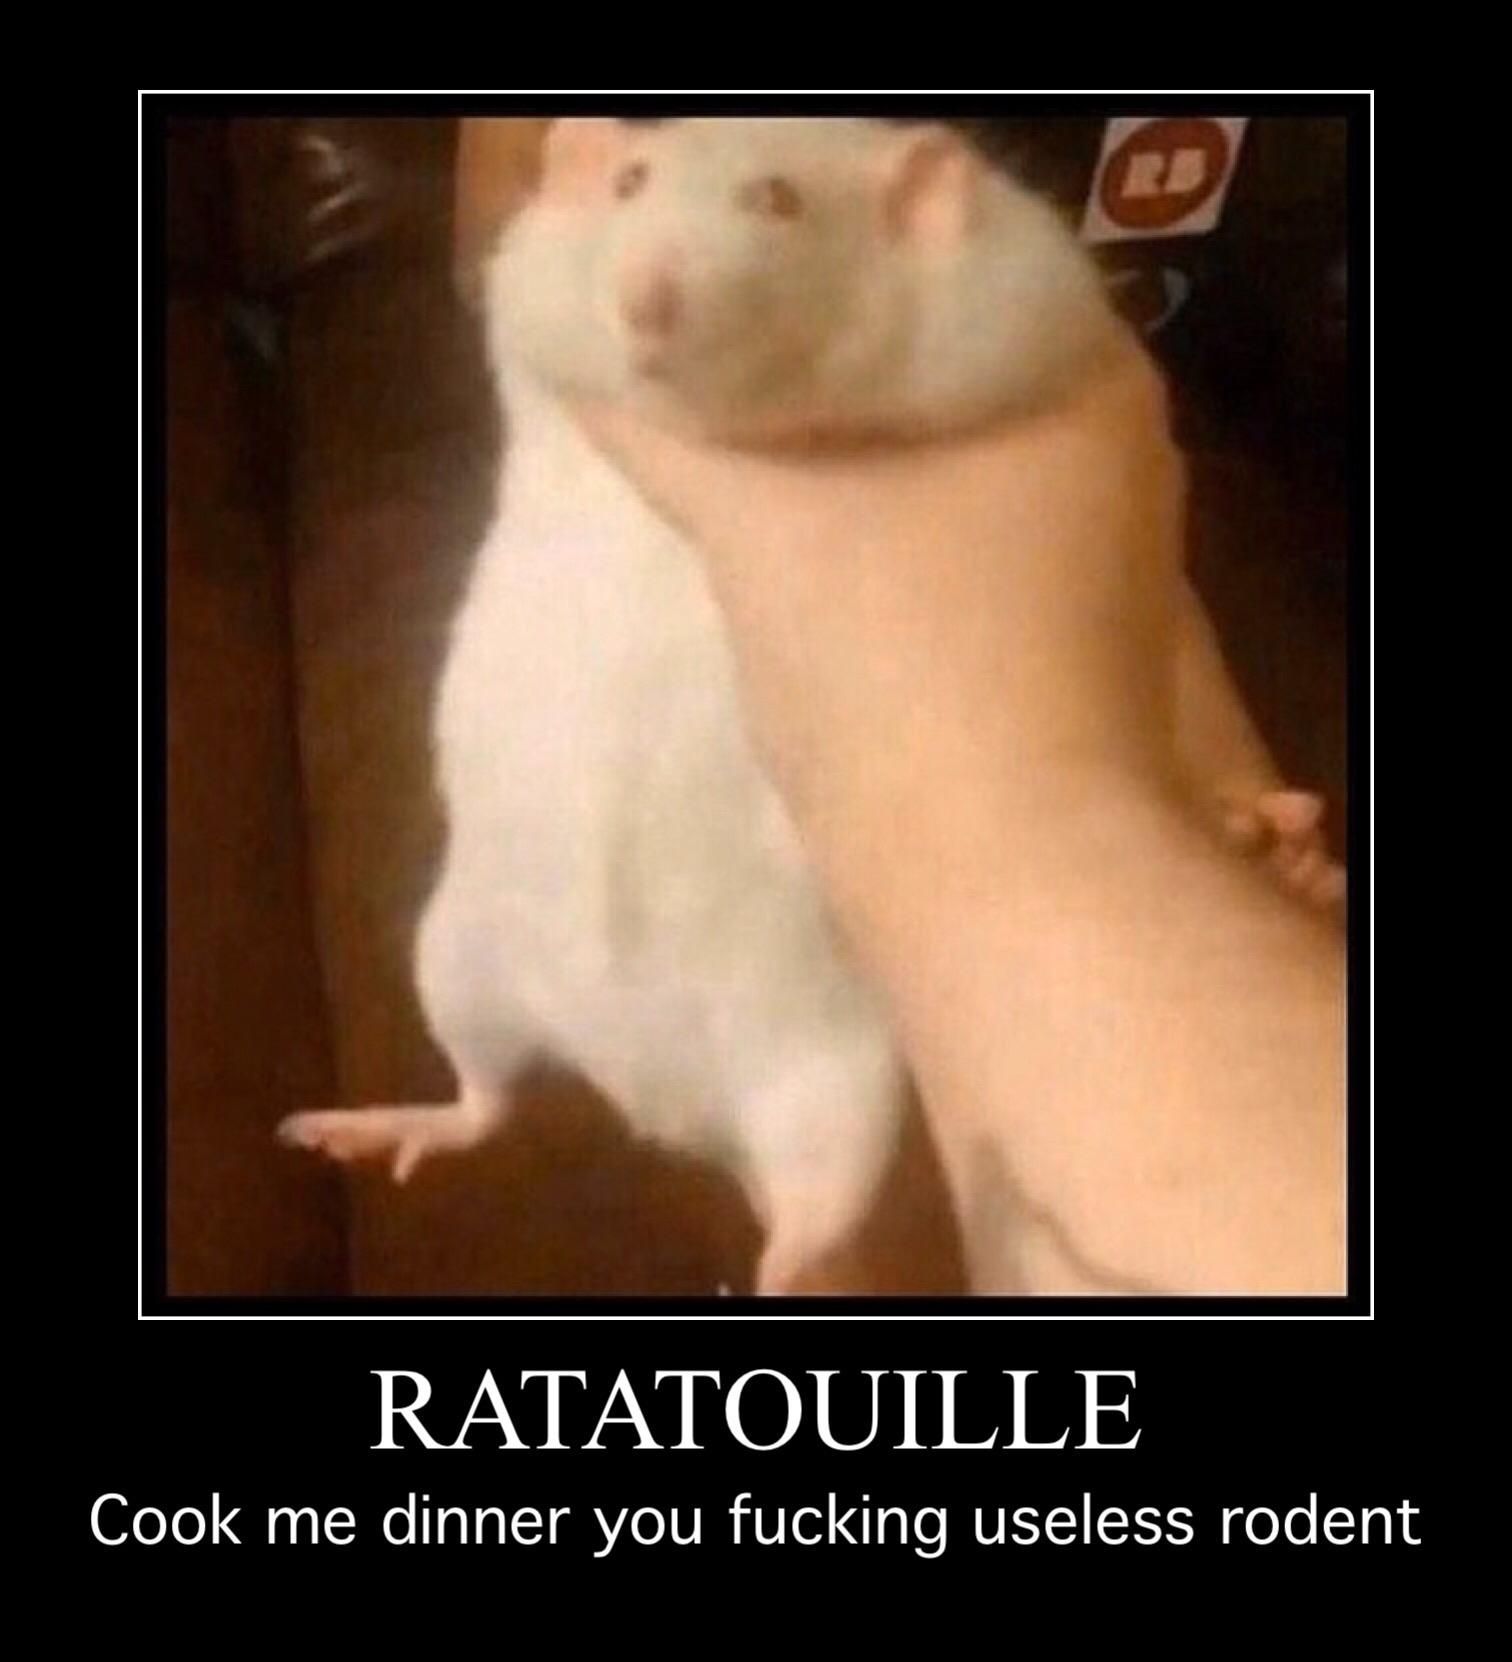 That rat ate the entire fridge